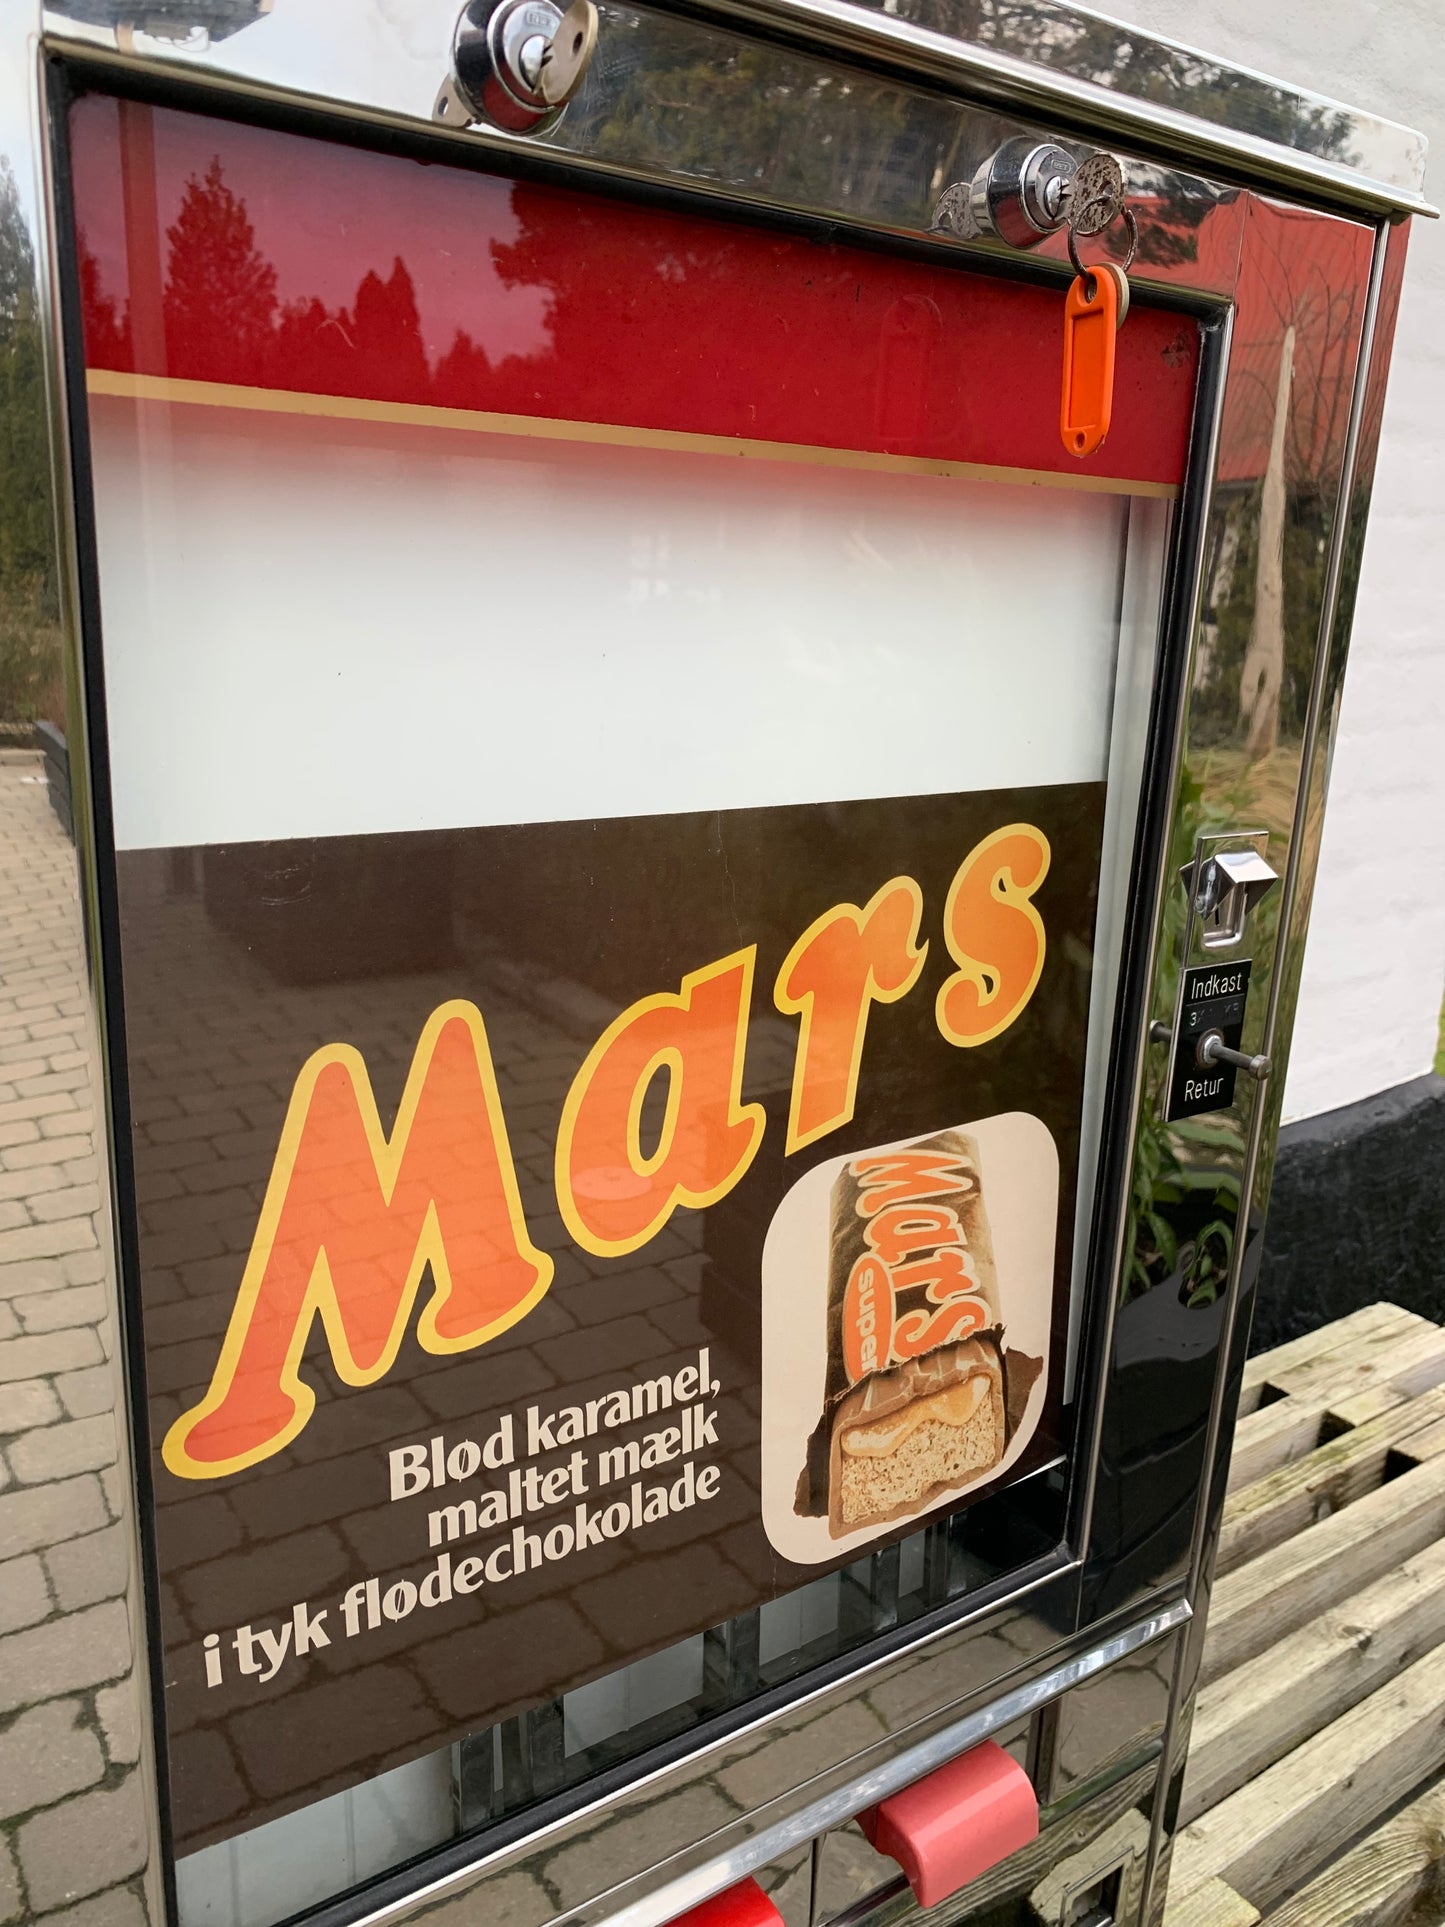 Wittenborg Mars varuautomat